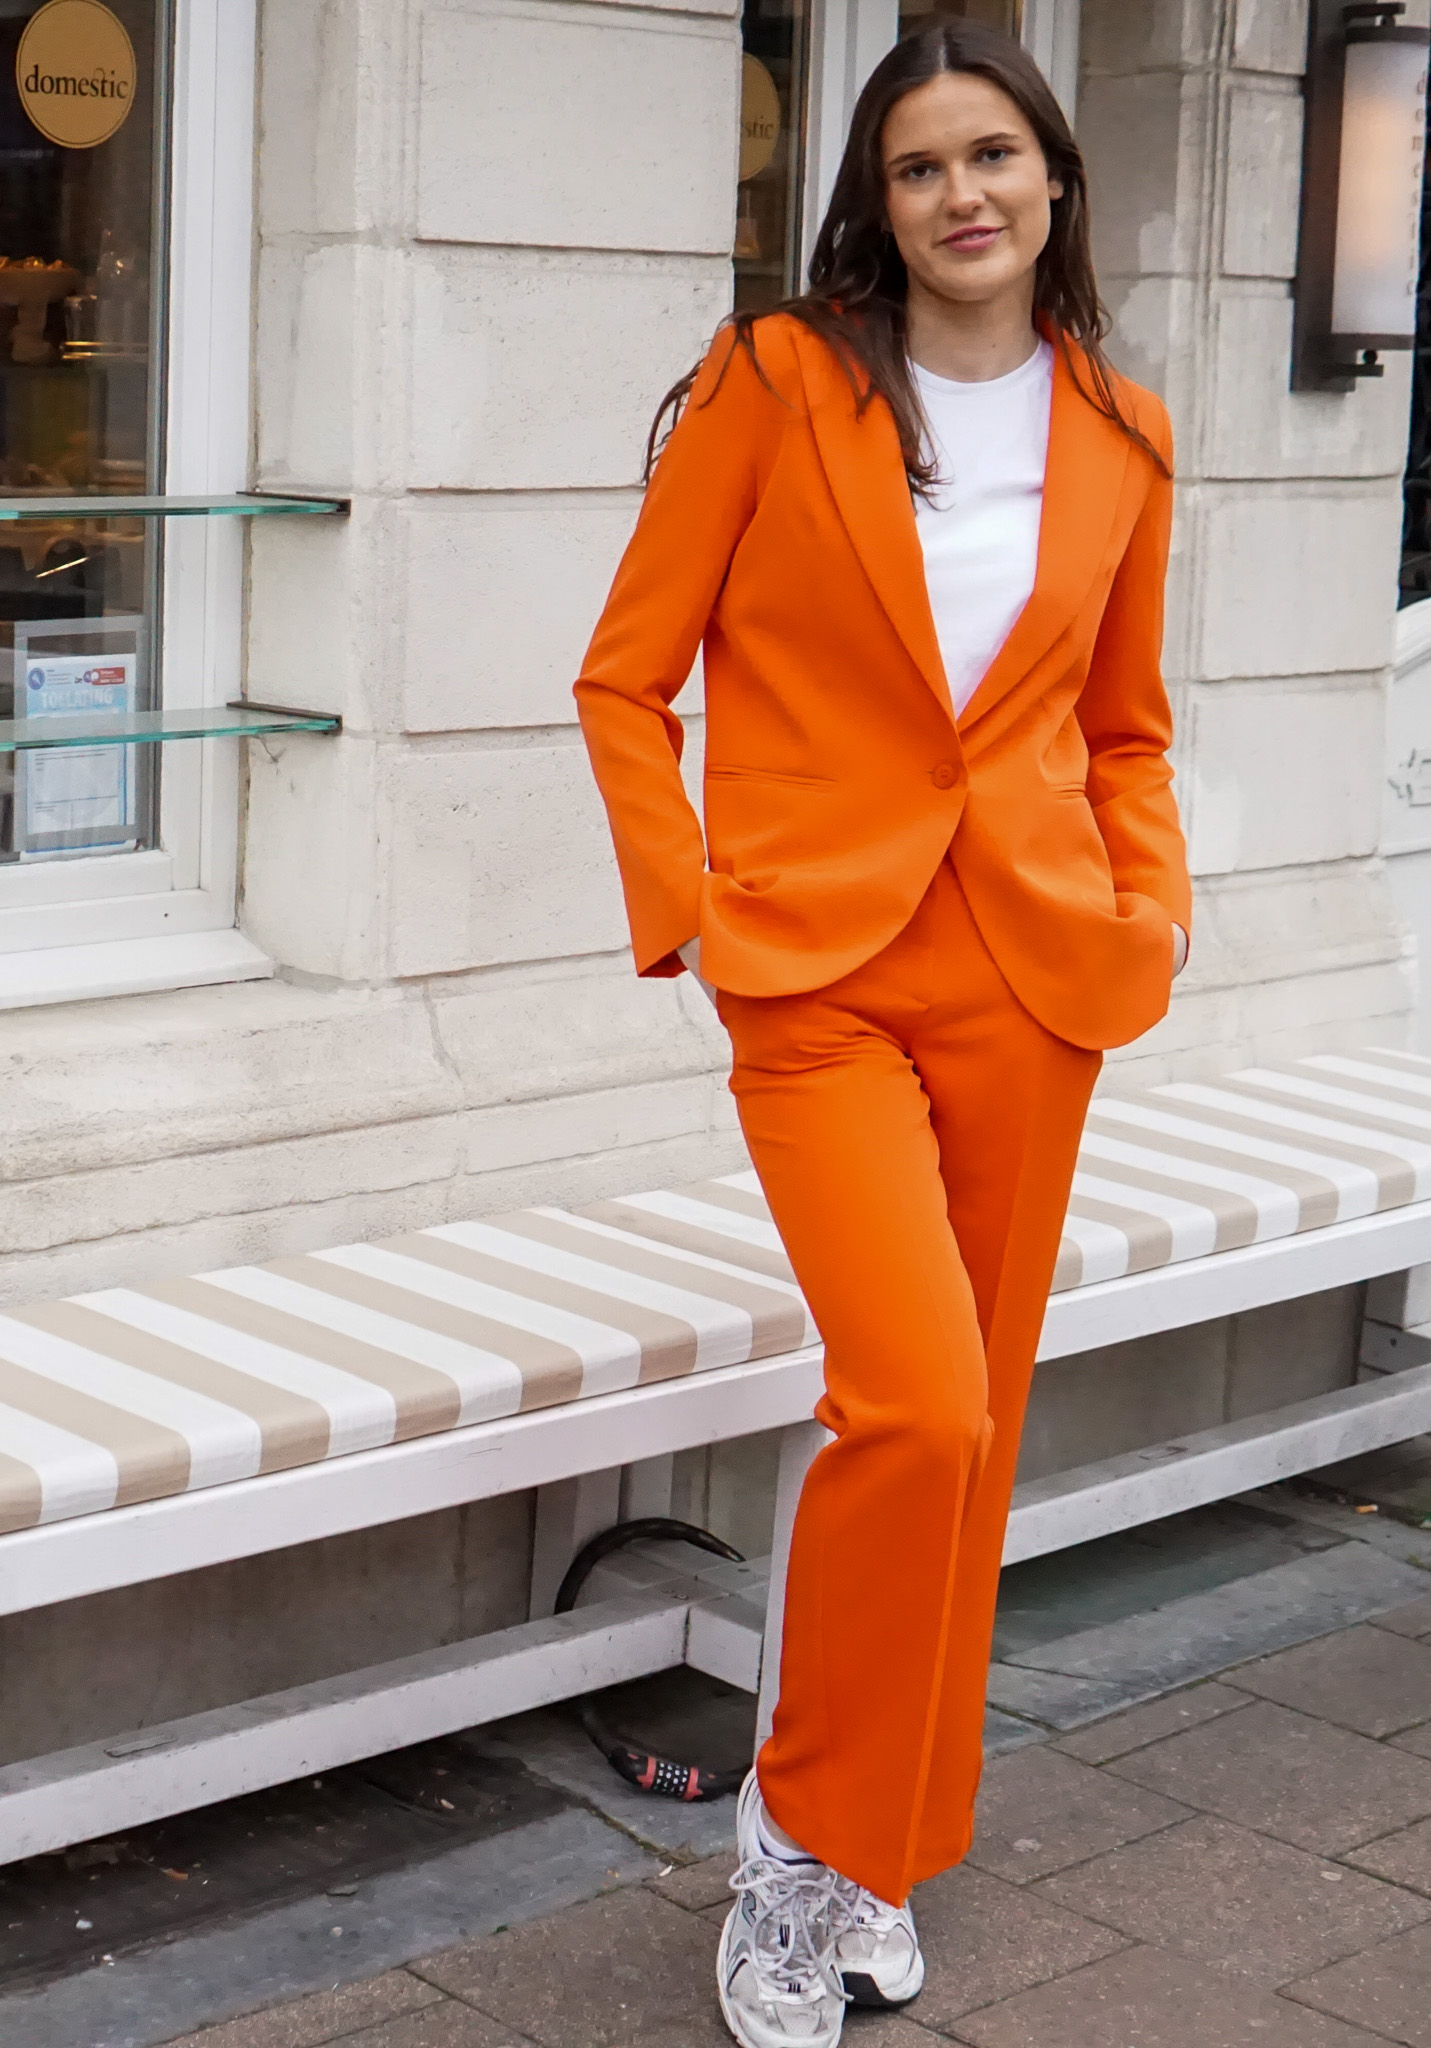 Image Amy blazer in funky orange